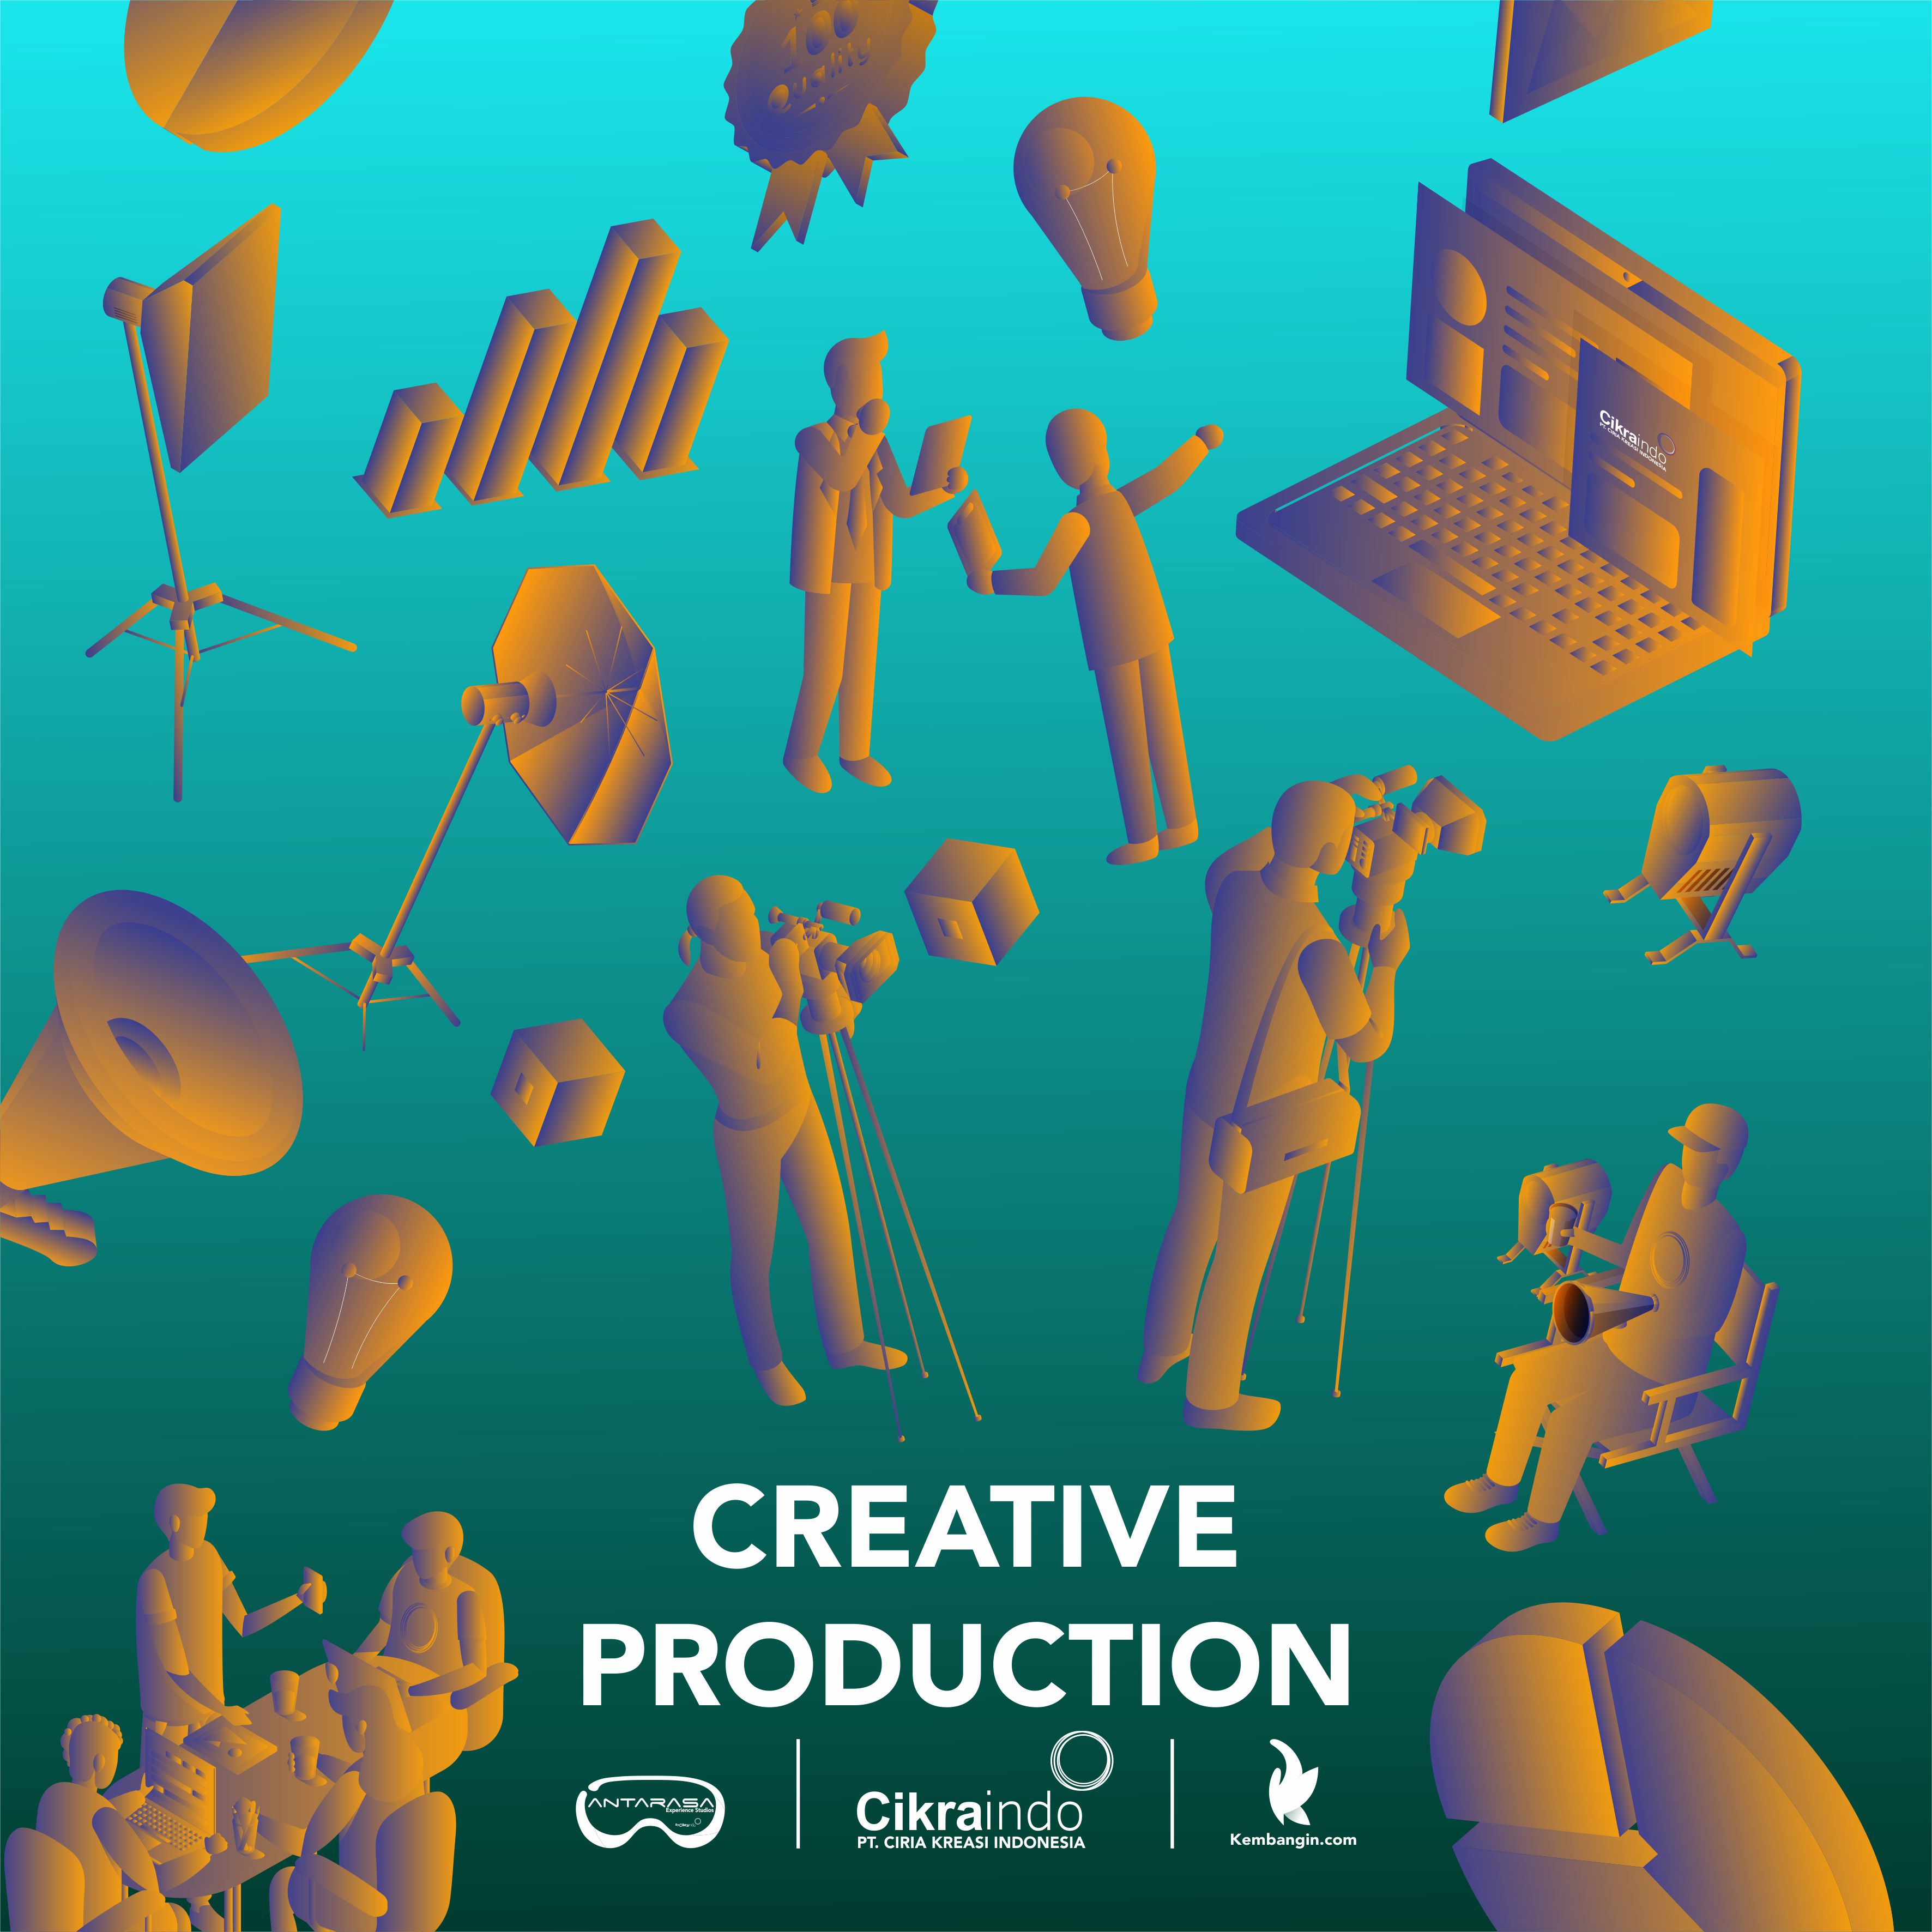 CREATIVE PRODUCTION